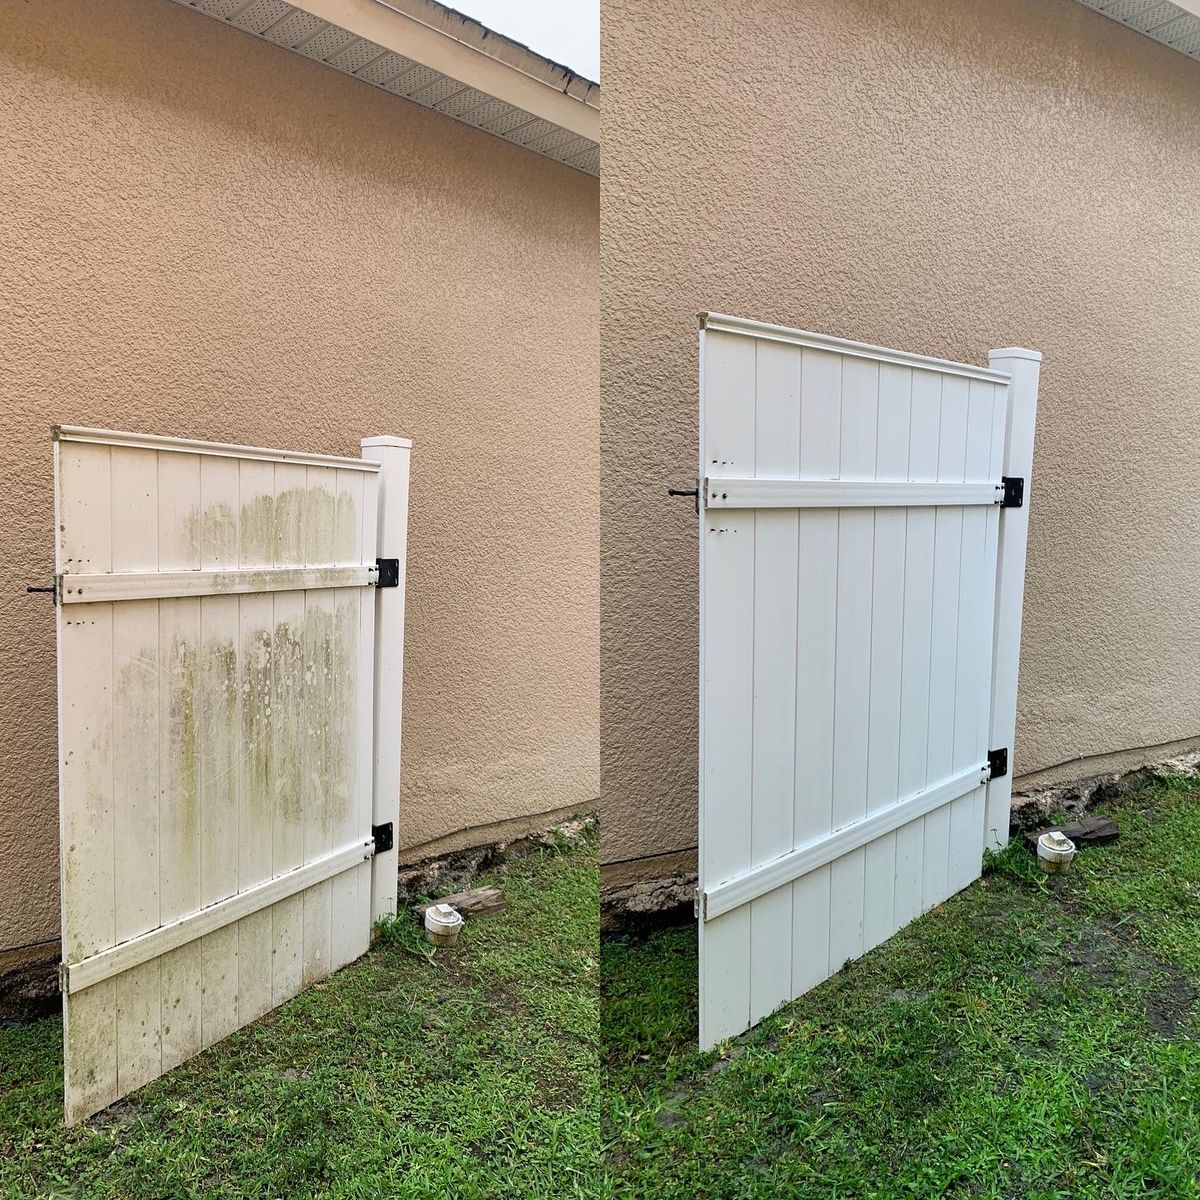 Fence Washing for Very Good Pressure Washing LLC in Orlando, Florida